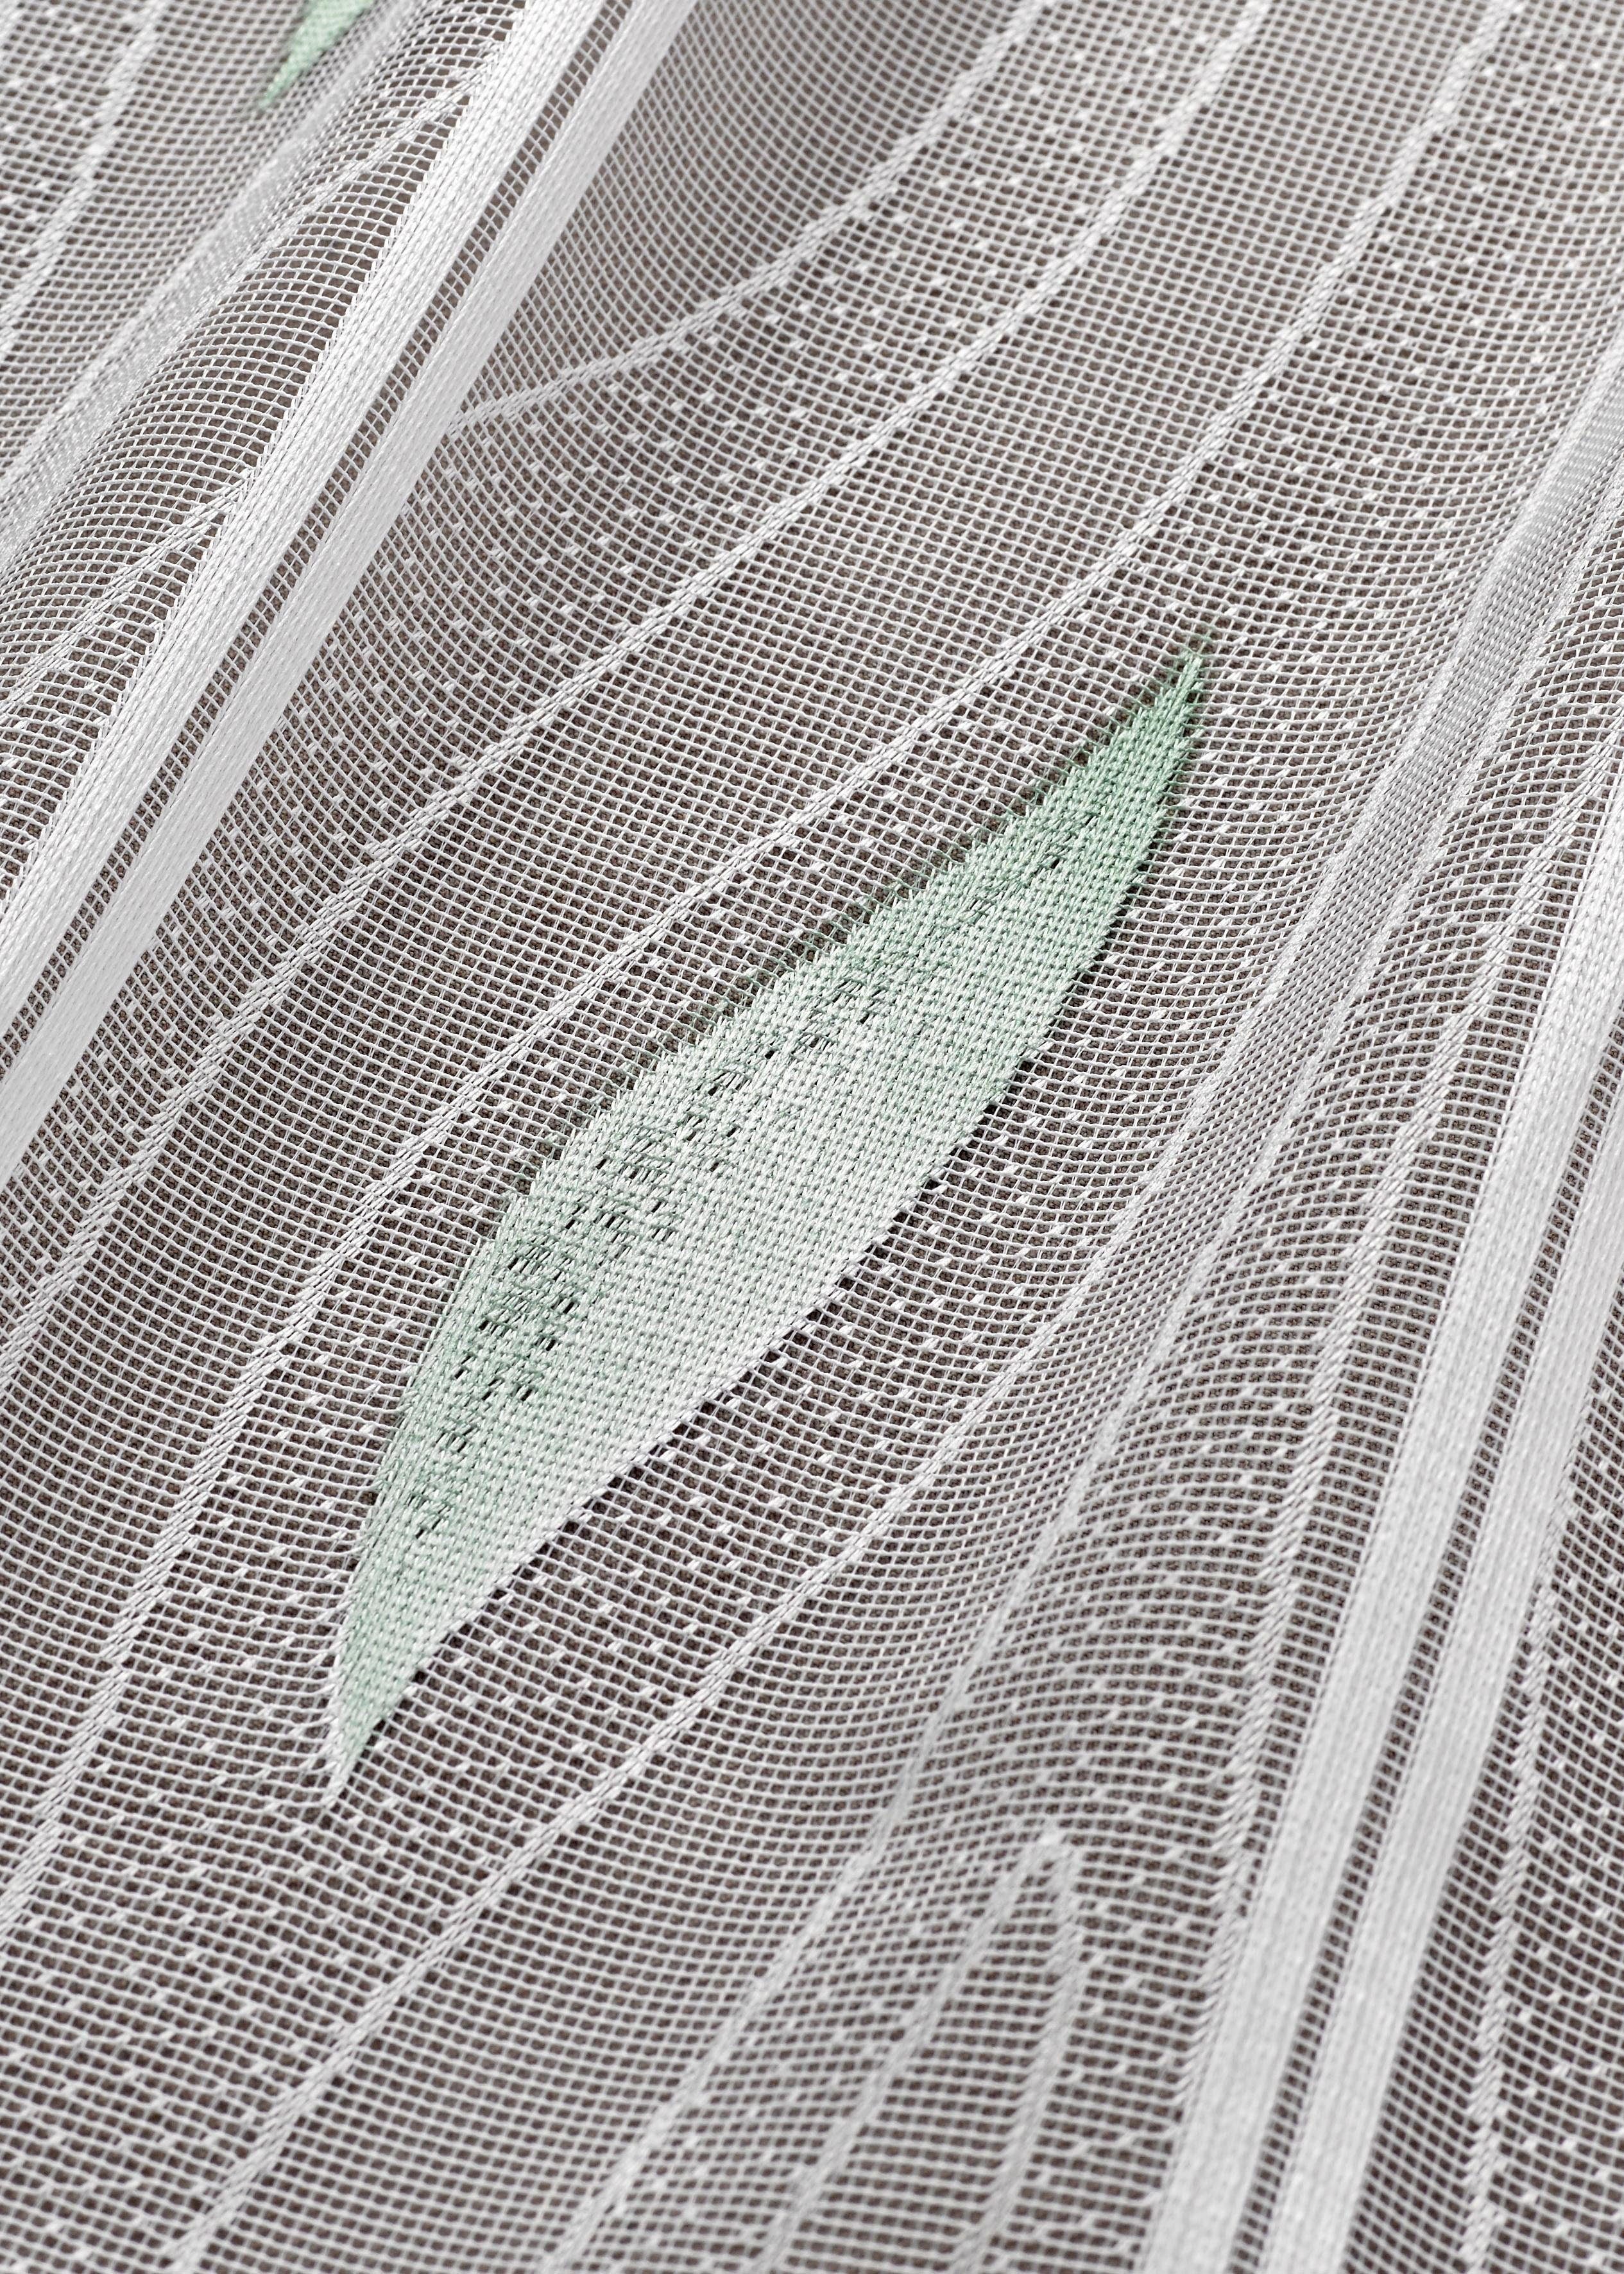 St), grün/weiß/apricot Scheibengardine Jacquard Stangendurchzug transparent, Mathilda, (1 VHG,